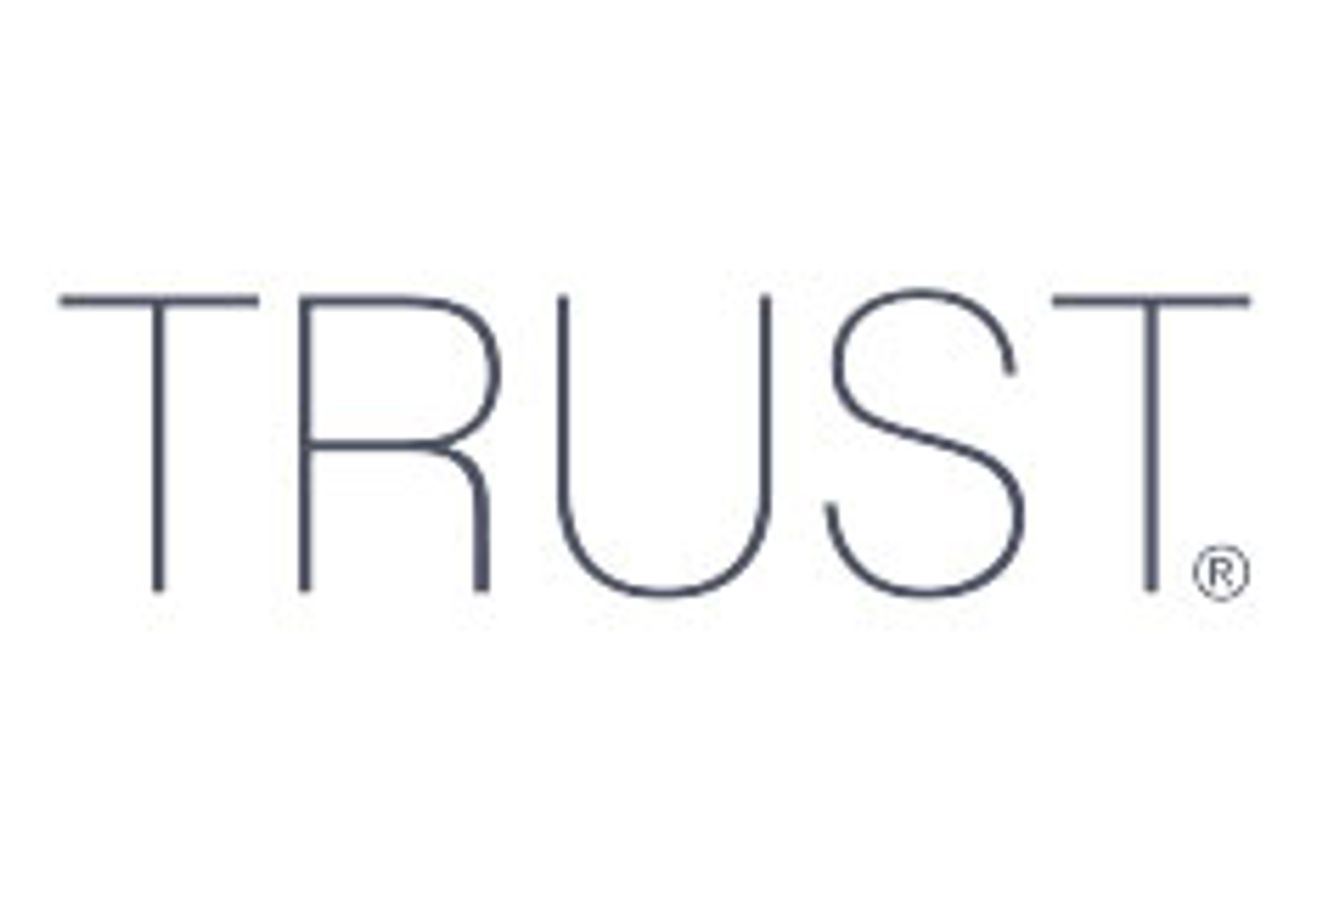 Trust Products, LLC